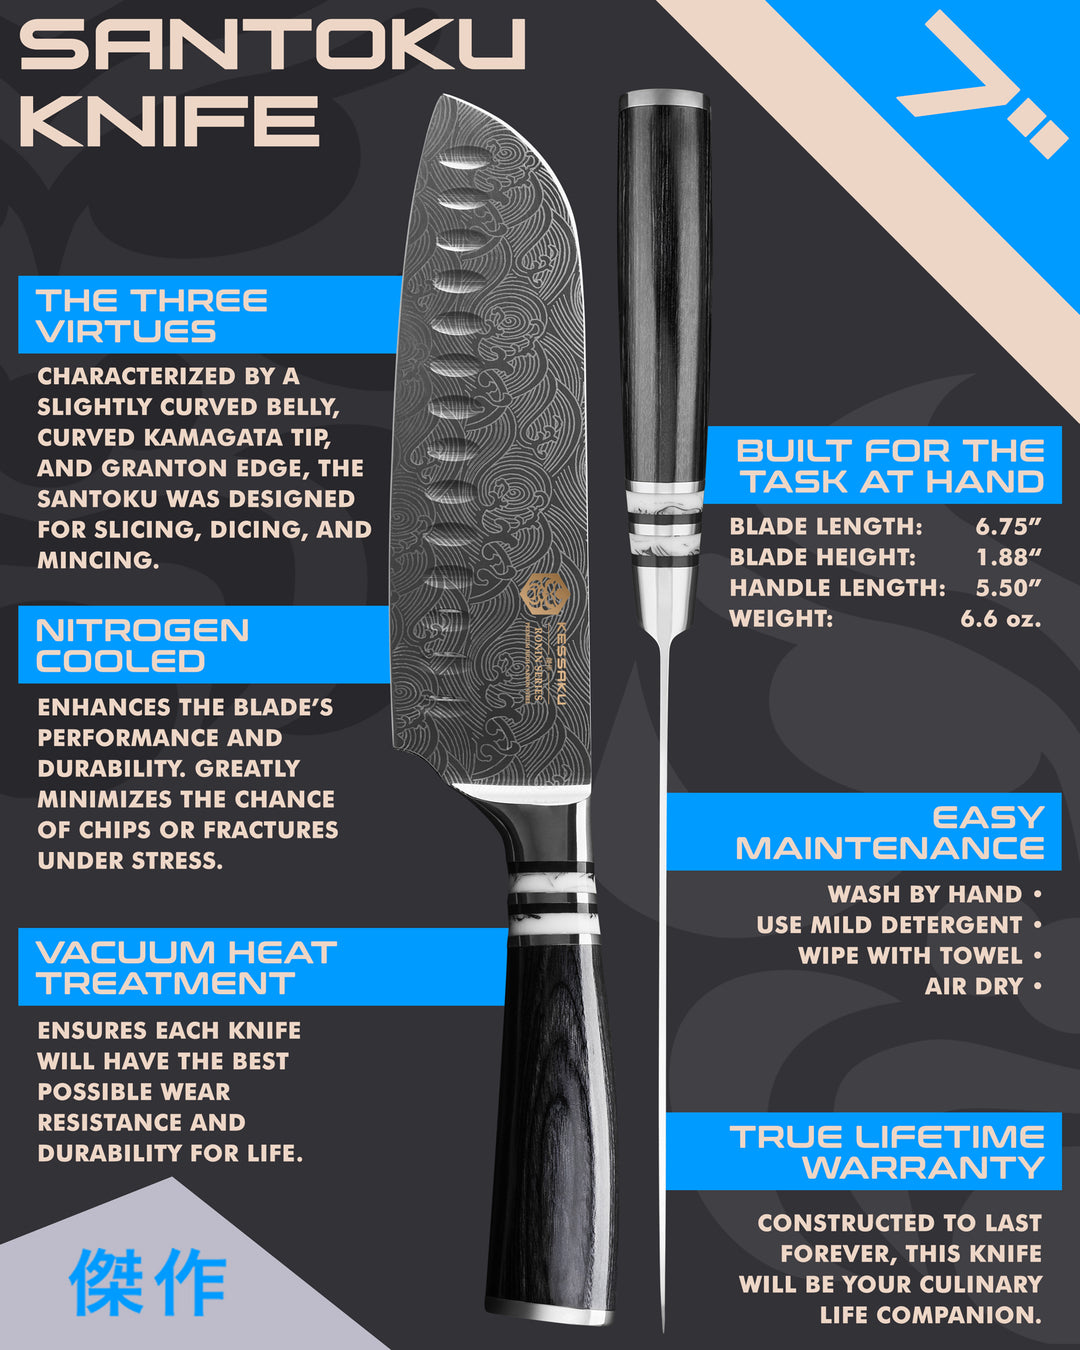 Kessaku Ronin Series Santoku Knife uses, dimensions, maintenance, warranty info, and additional blade treatments